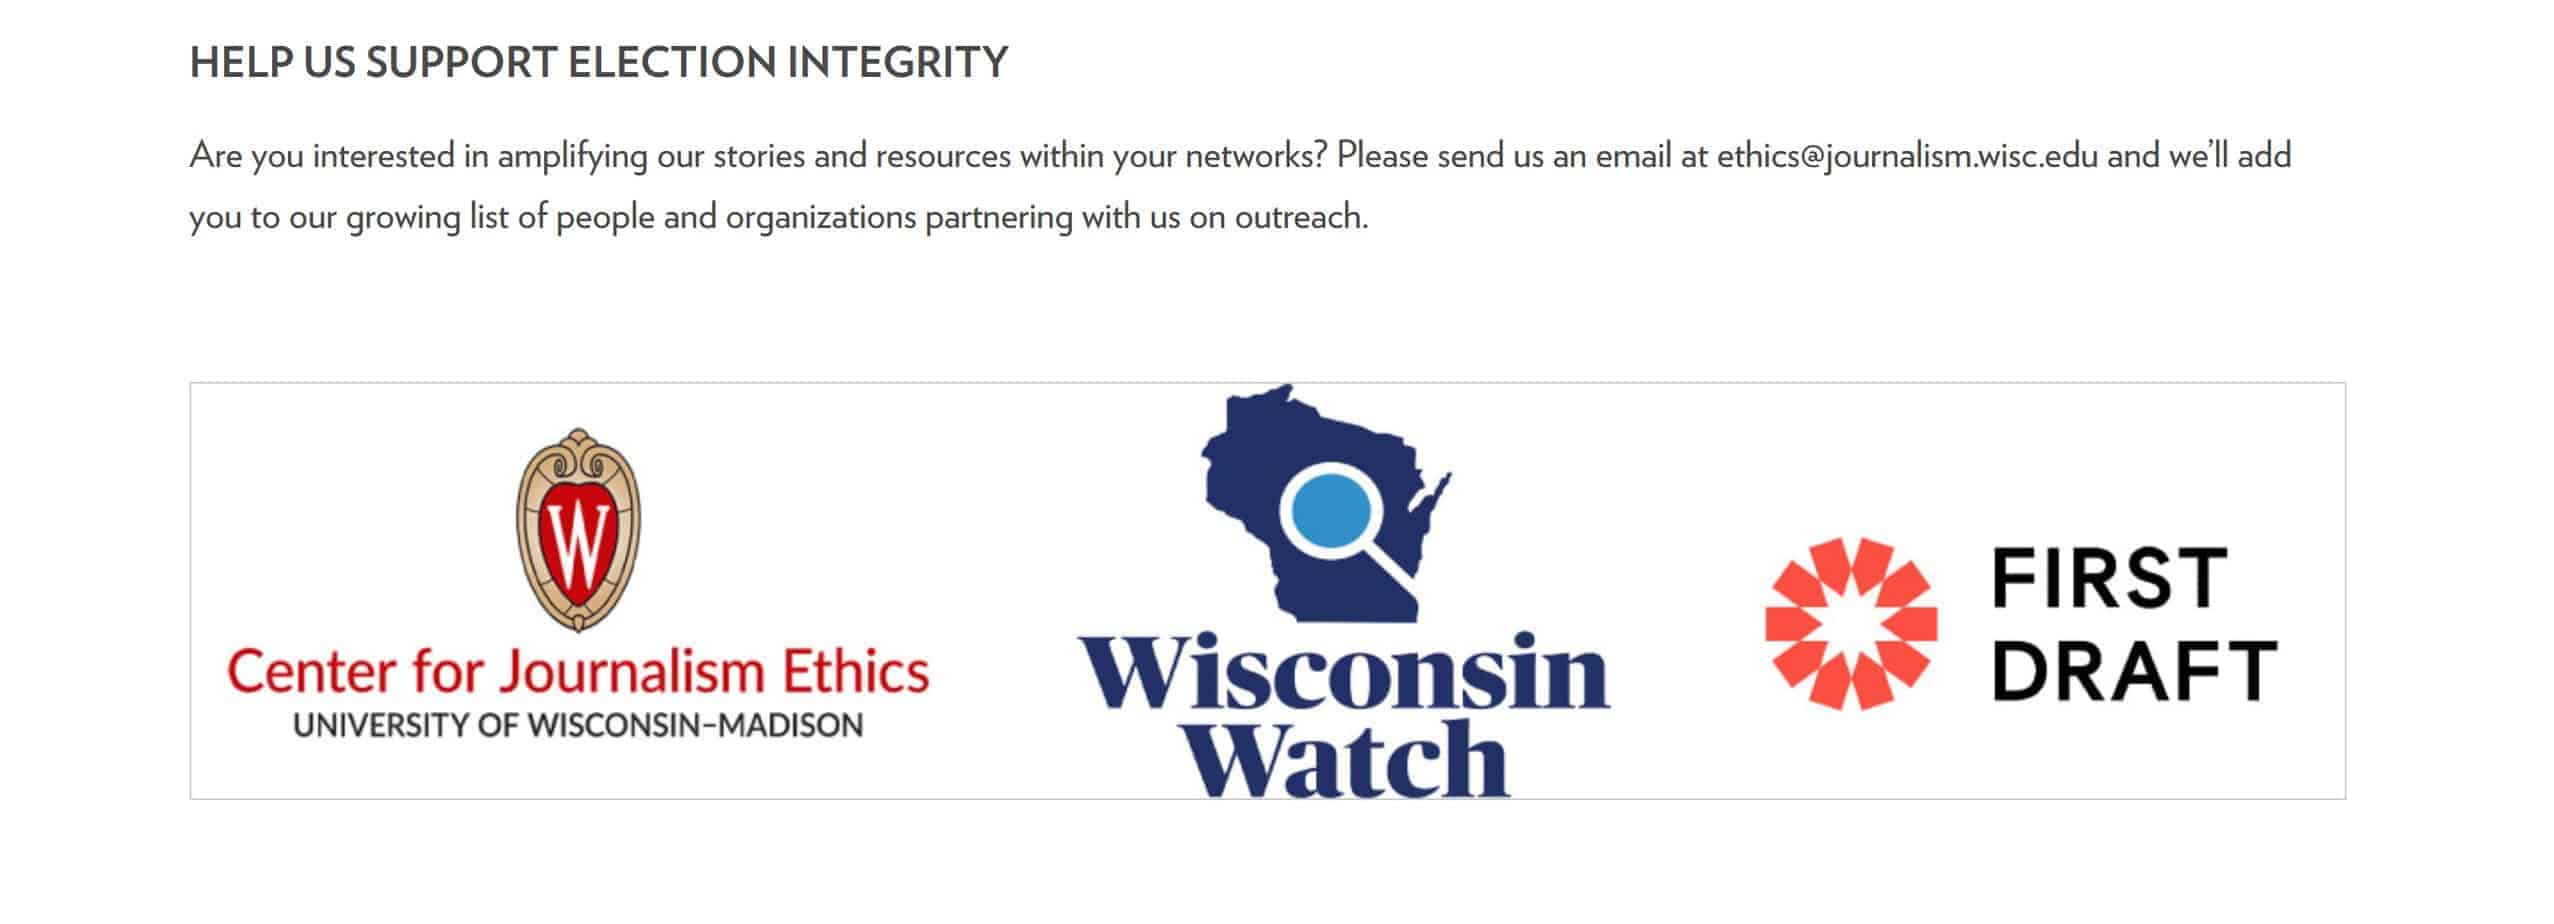 Wisconsin watch